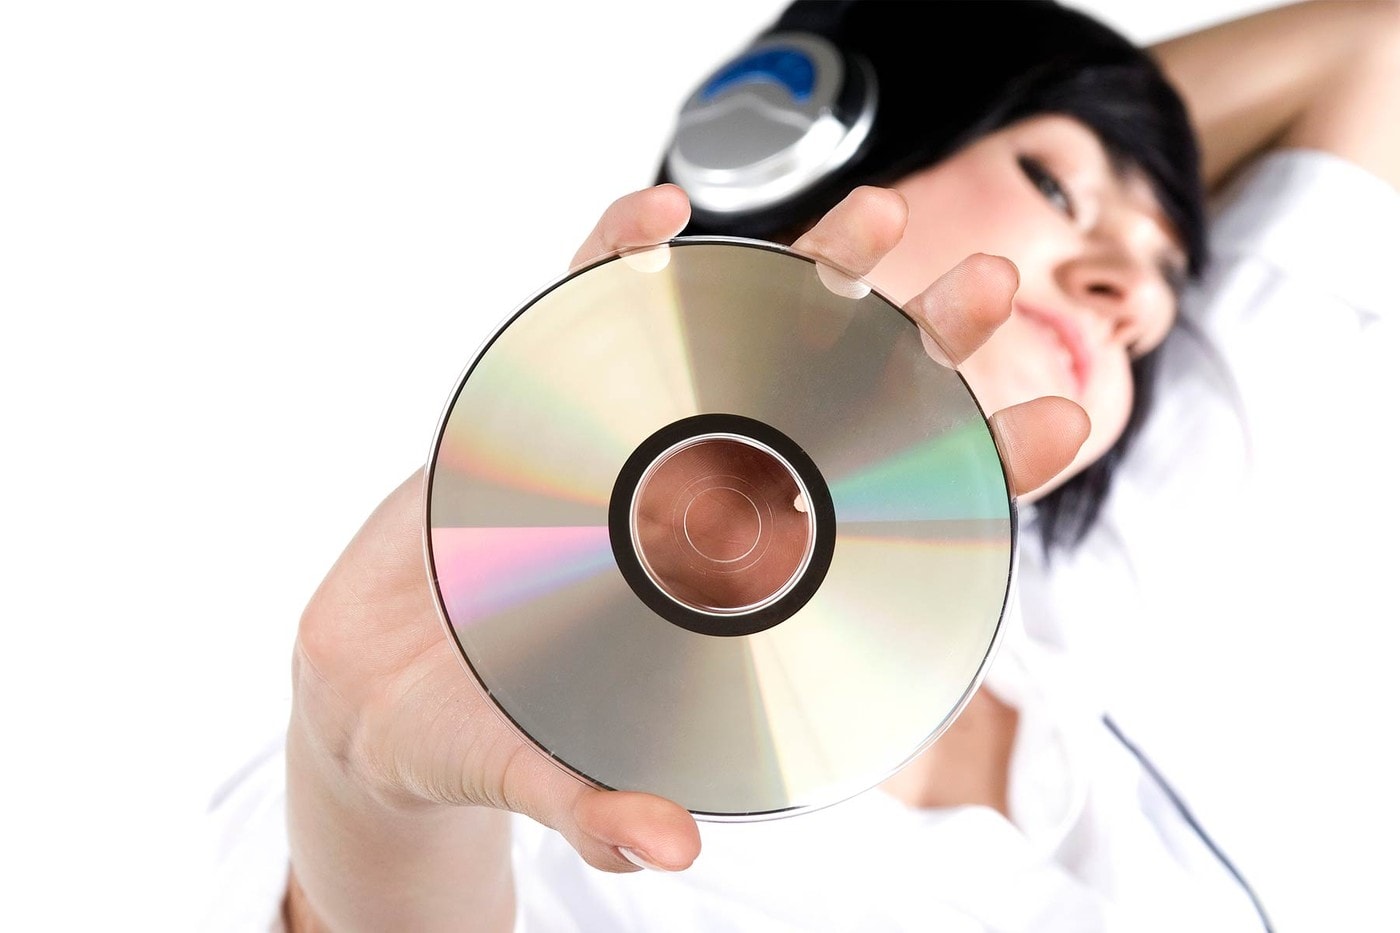 CD 판매량이 17년 만에 증가했다, 방탄소년단, 아델, 30, 빌보드, MRC 데이터, 바이닐